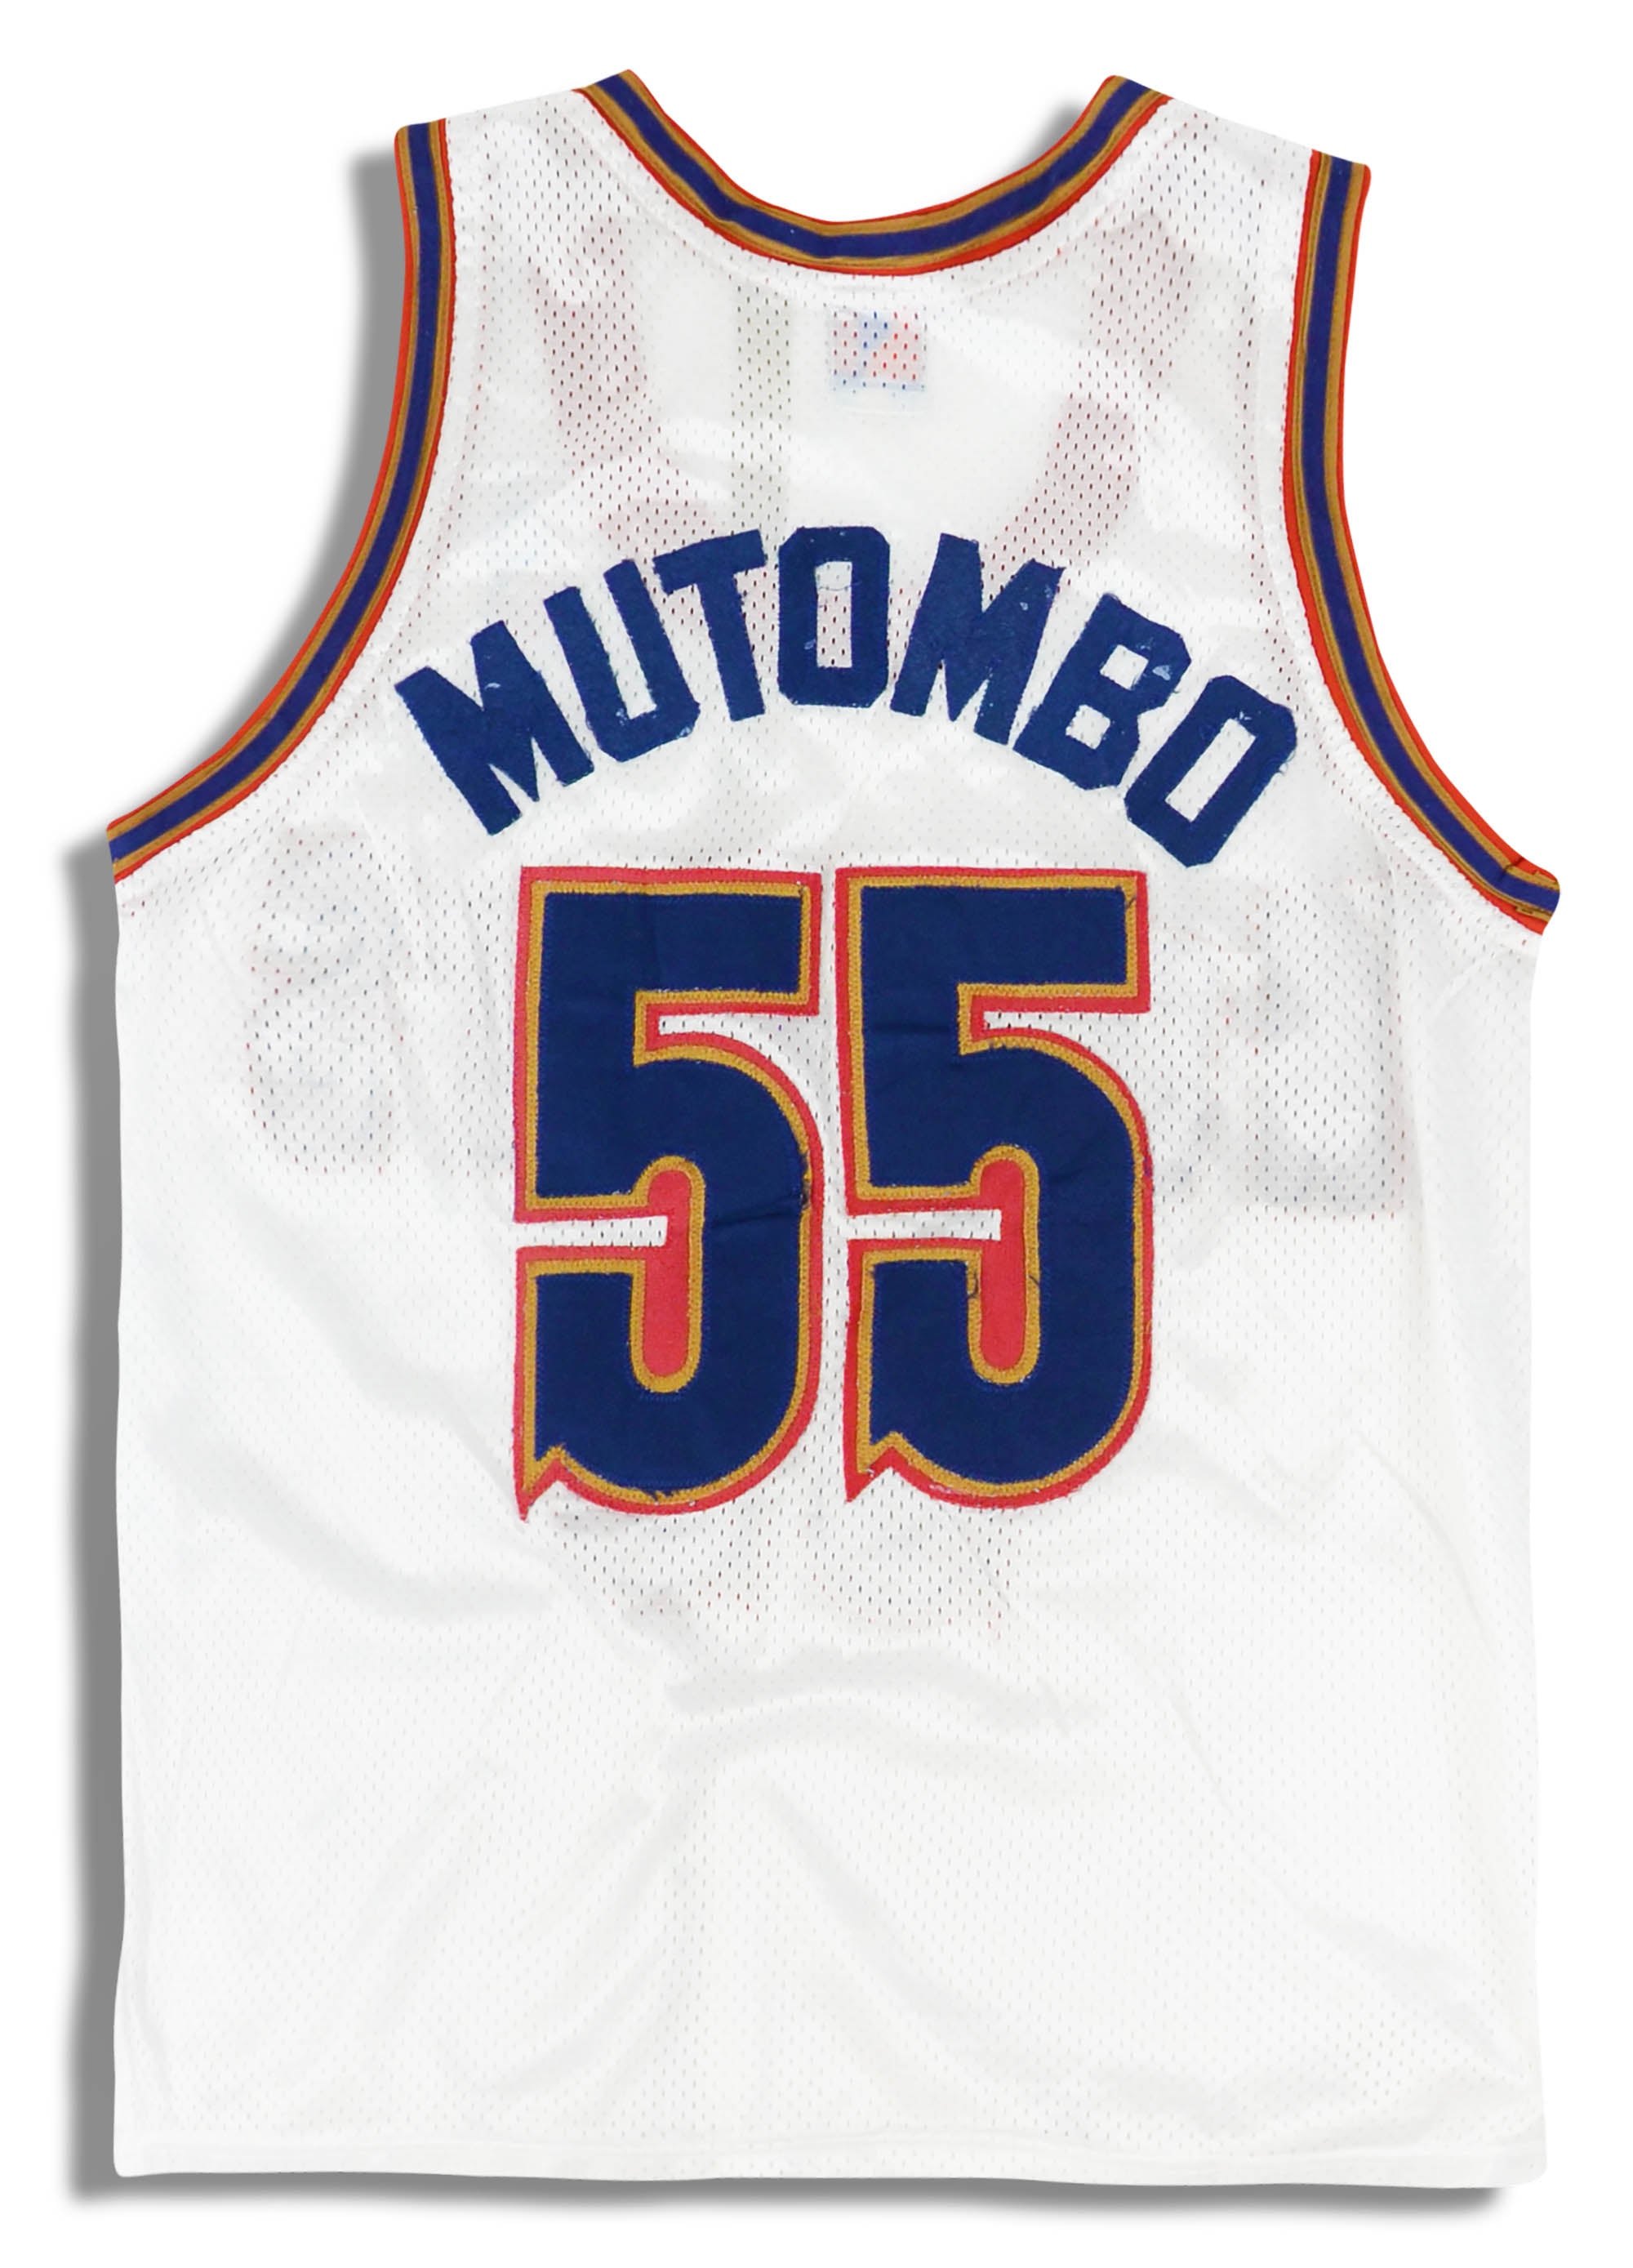 1993-95 DENVER NUGGETS MUTOMBO #55 CHAMPION JERSEY (AWAY) M